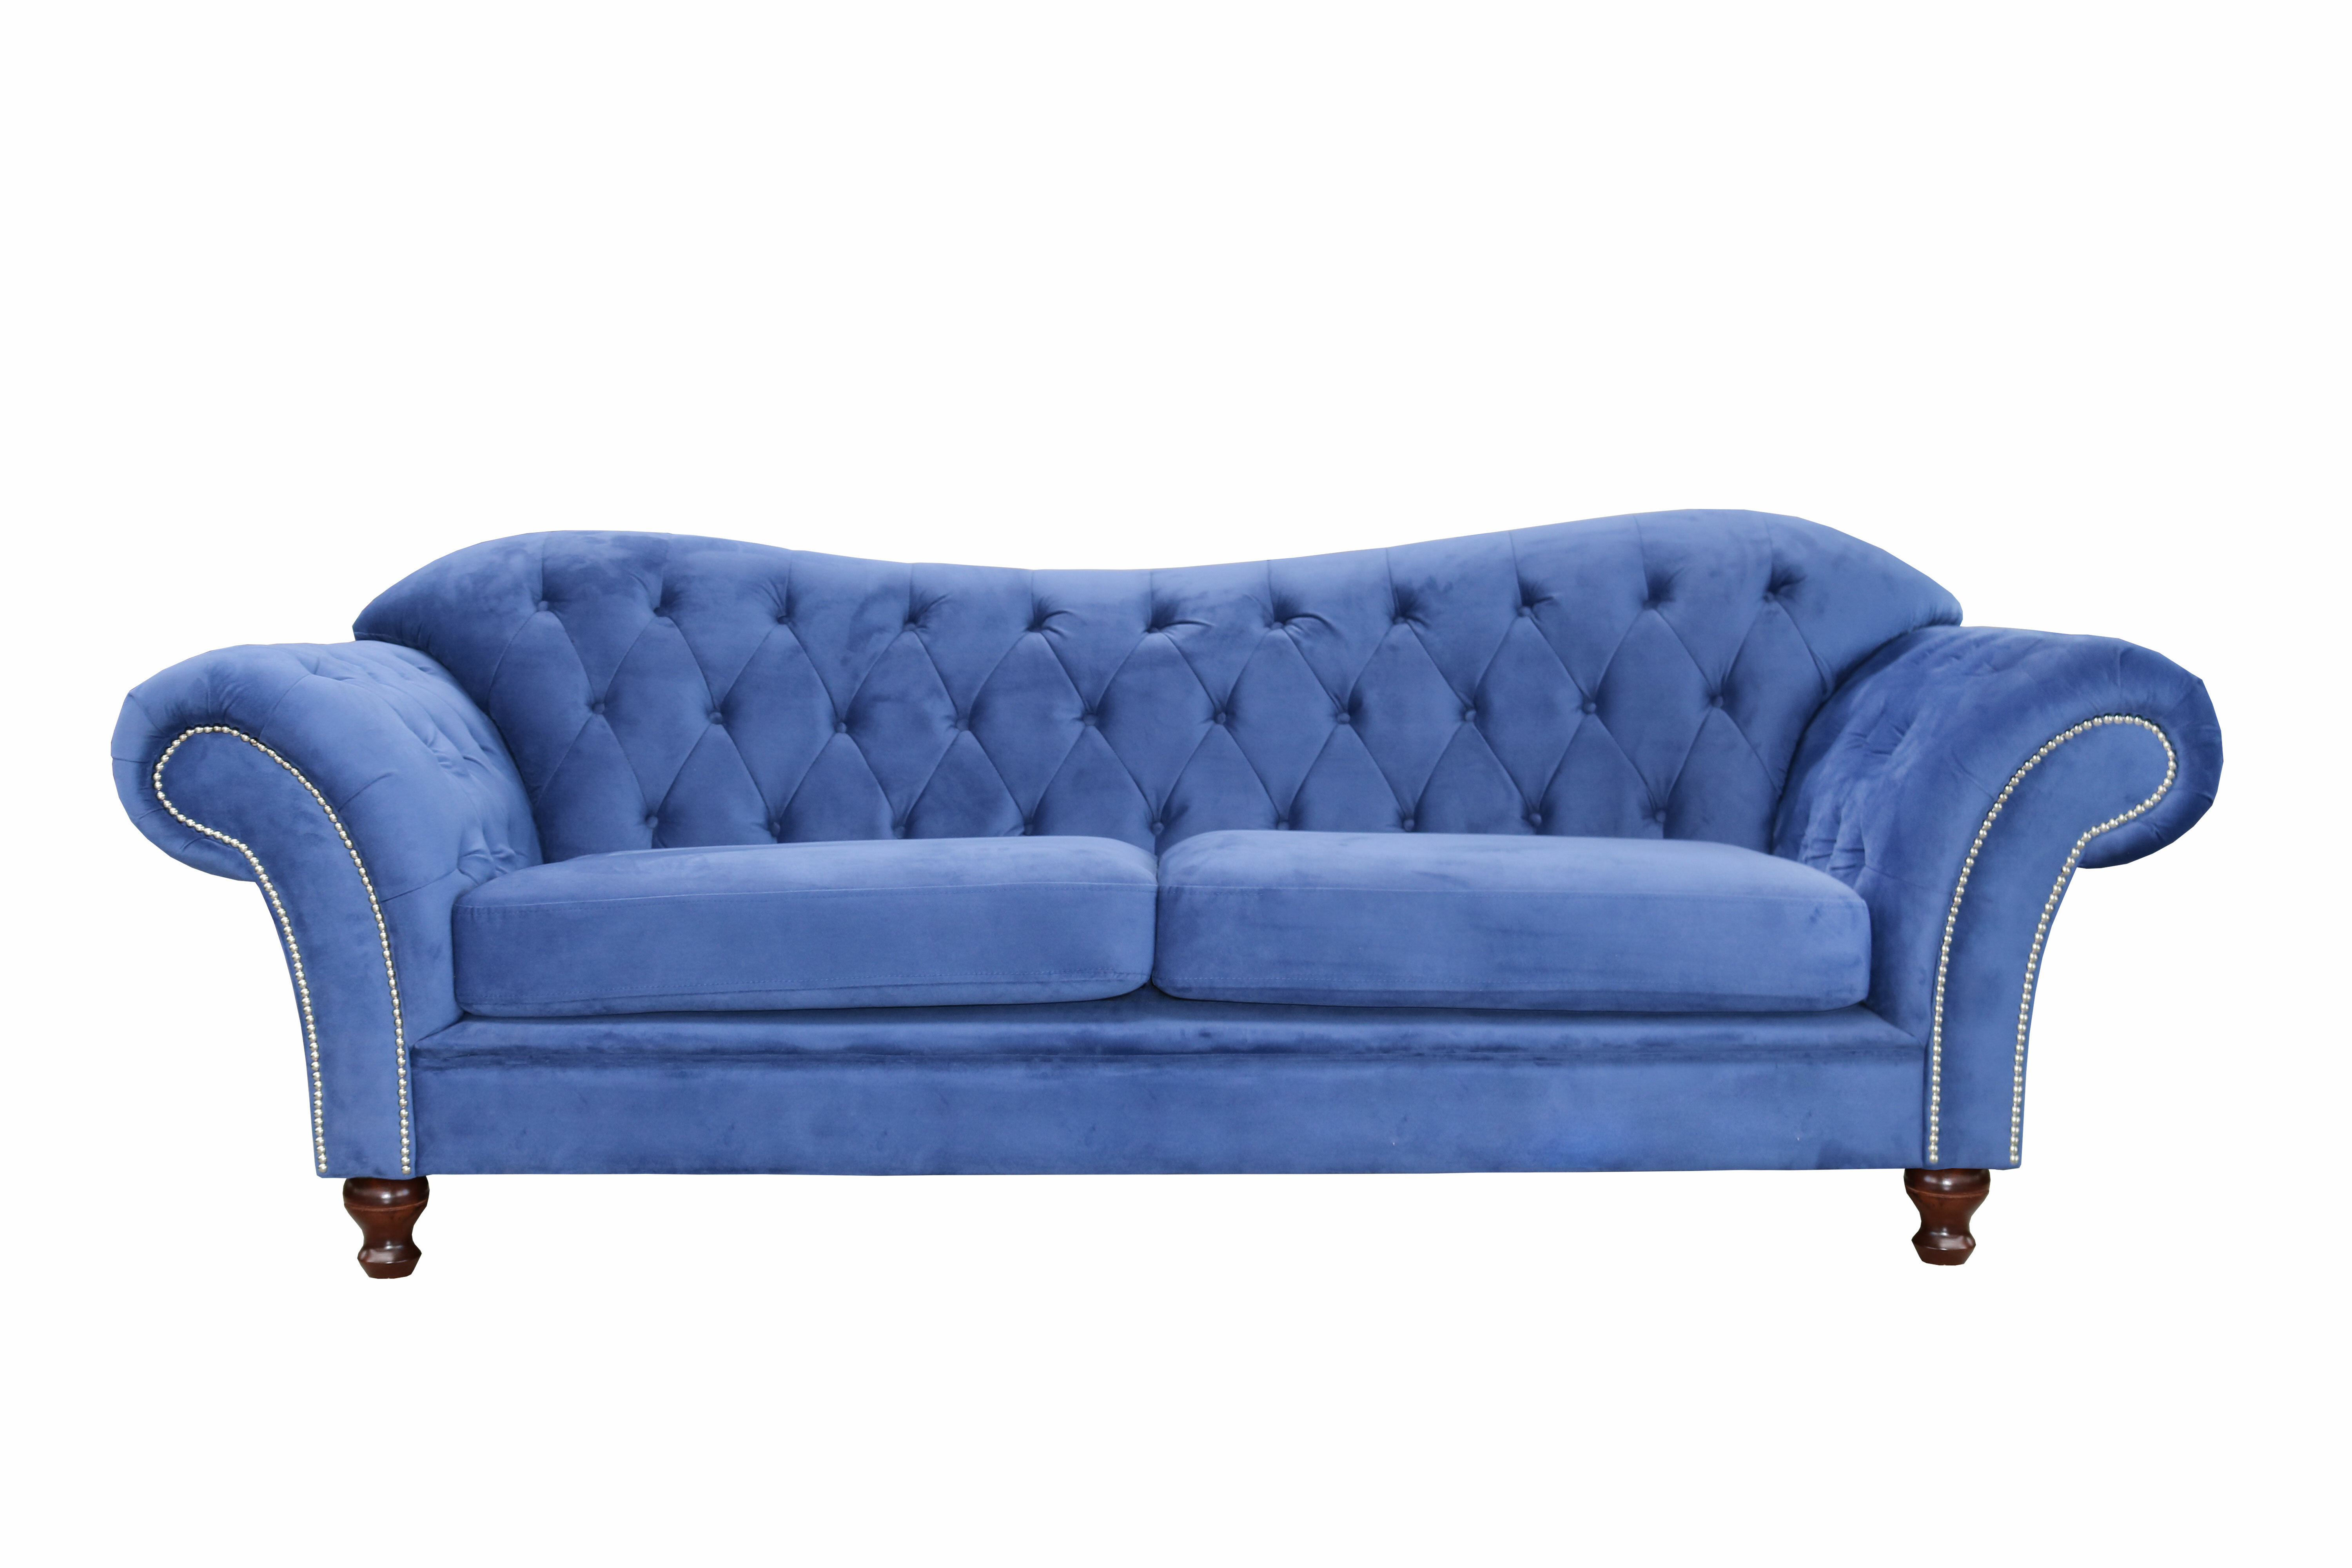 dannette sofa bed wayfair